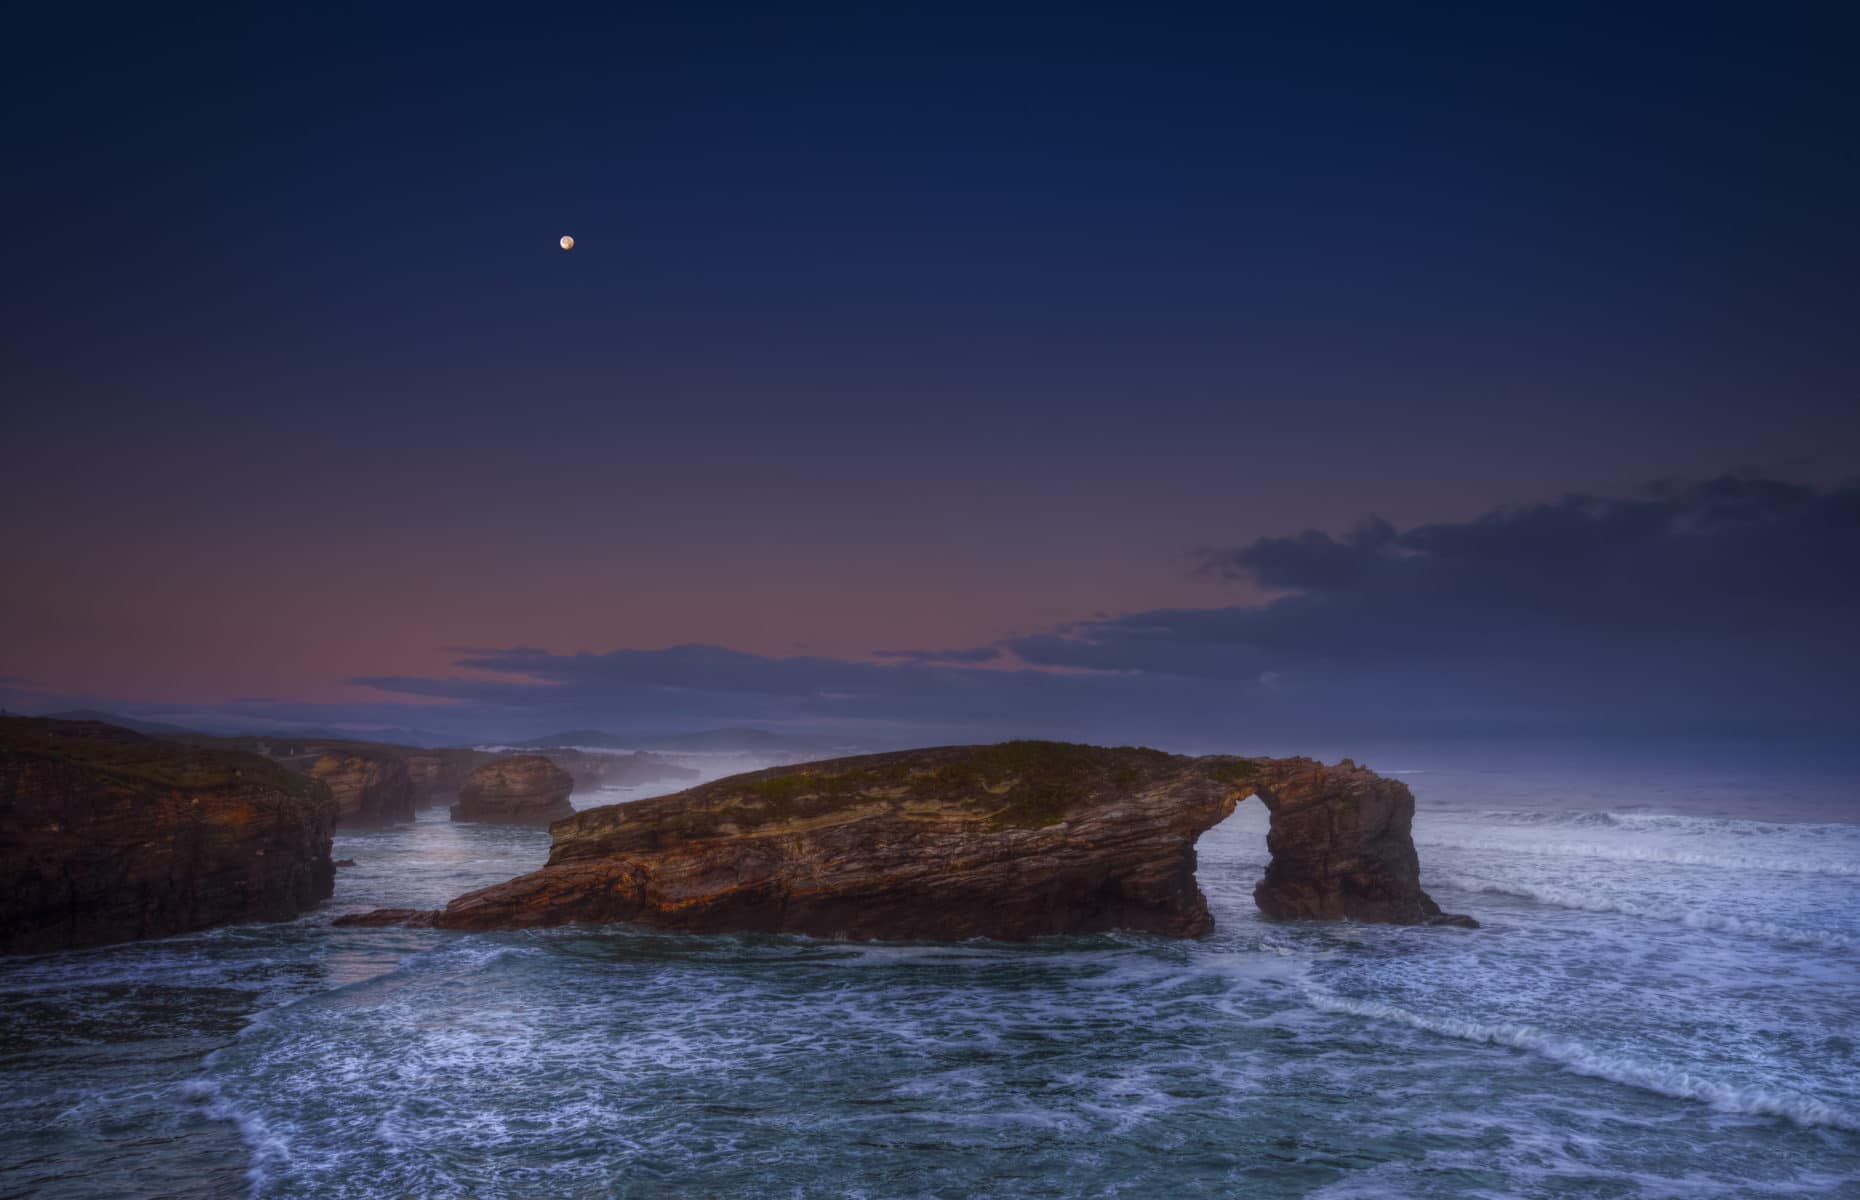 Moonlight, Rock Formation near the sea